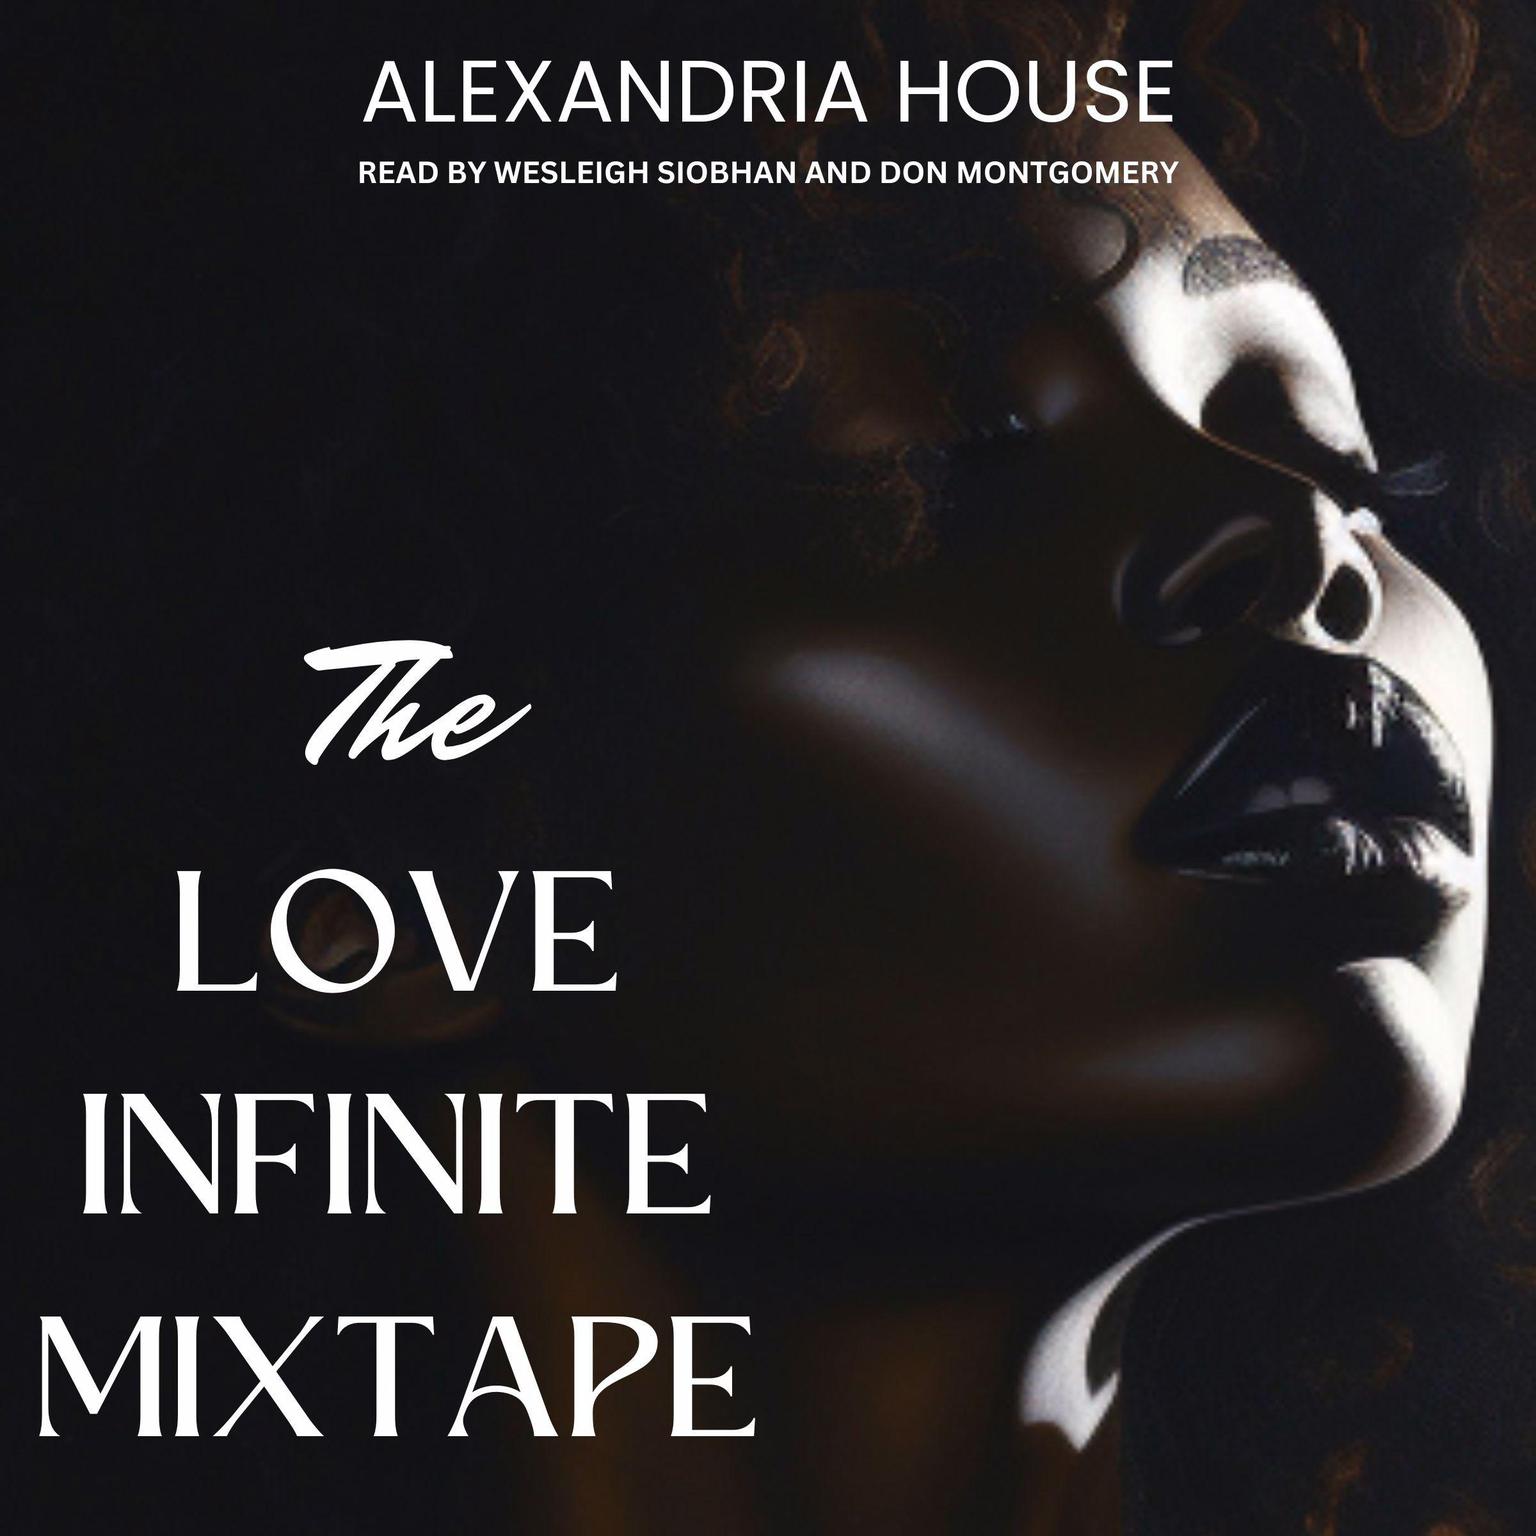 the love infinite mixtape Audiobook, by Alexandria House